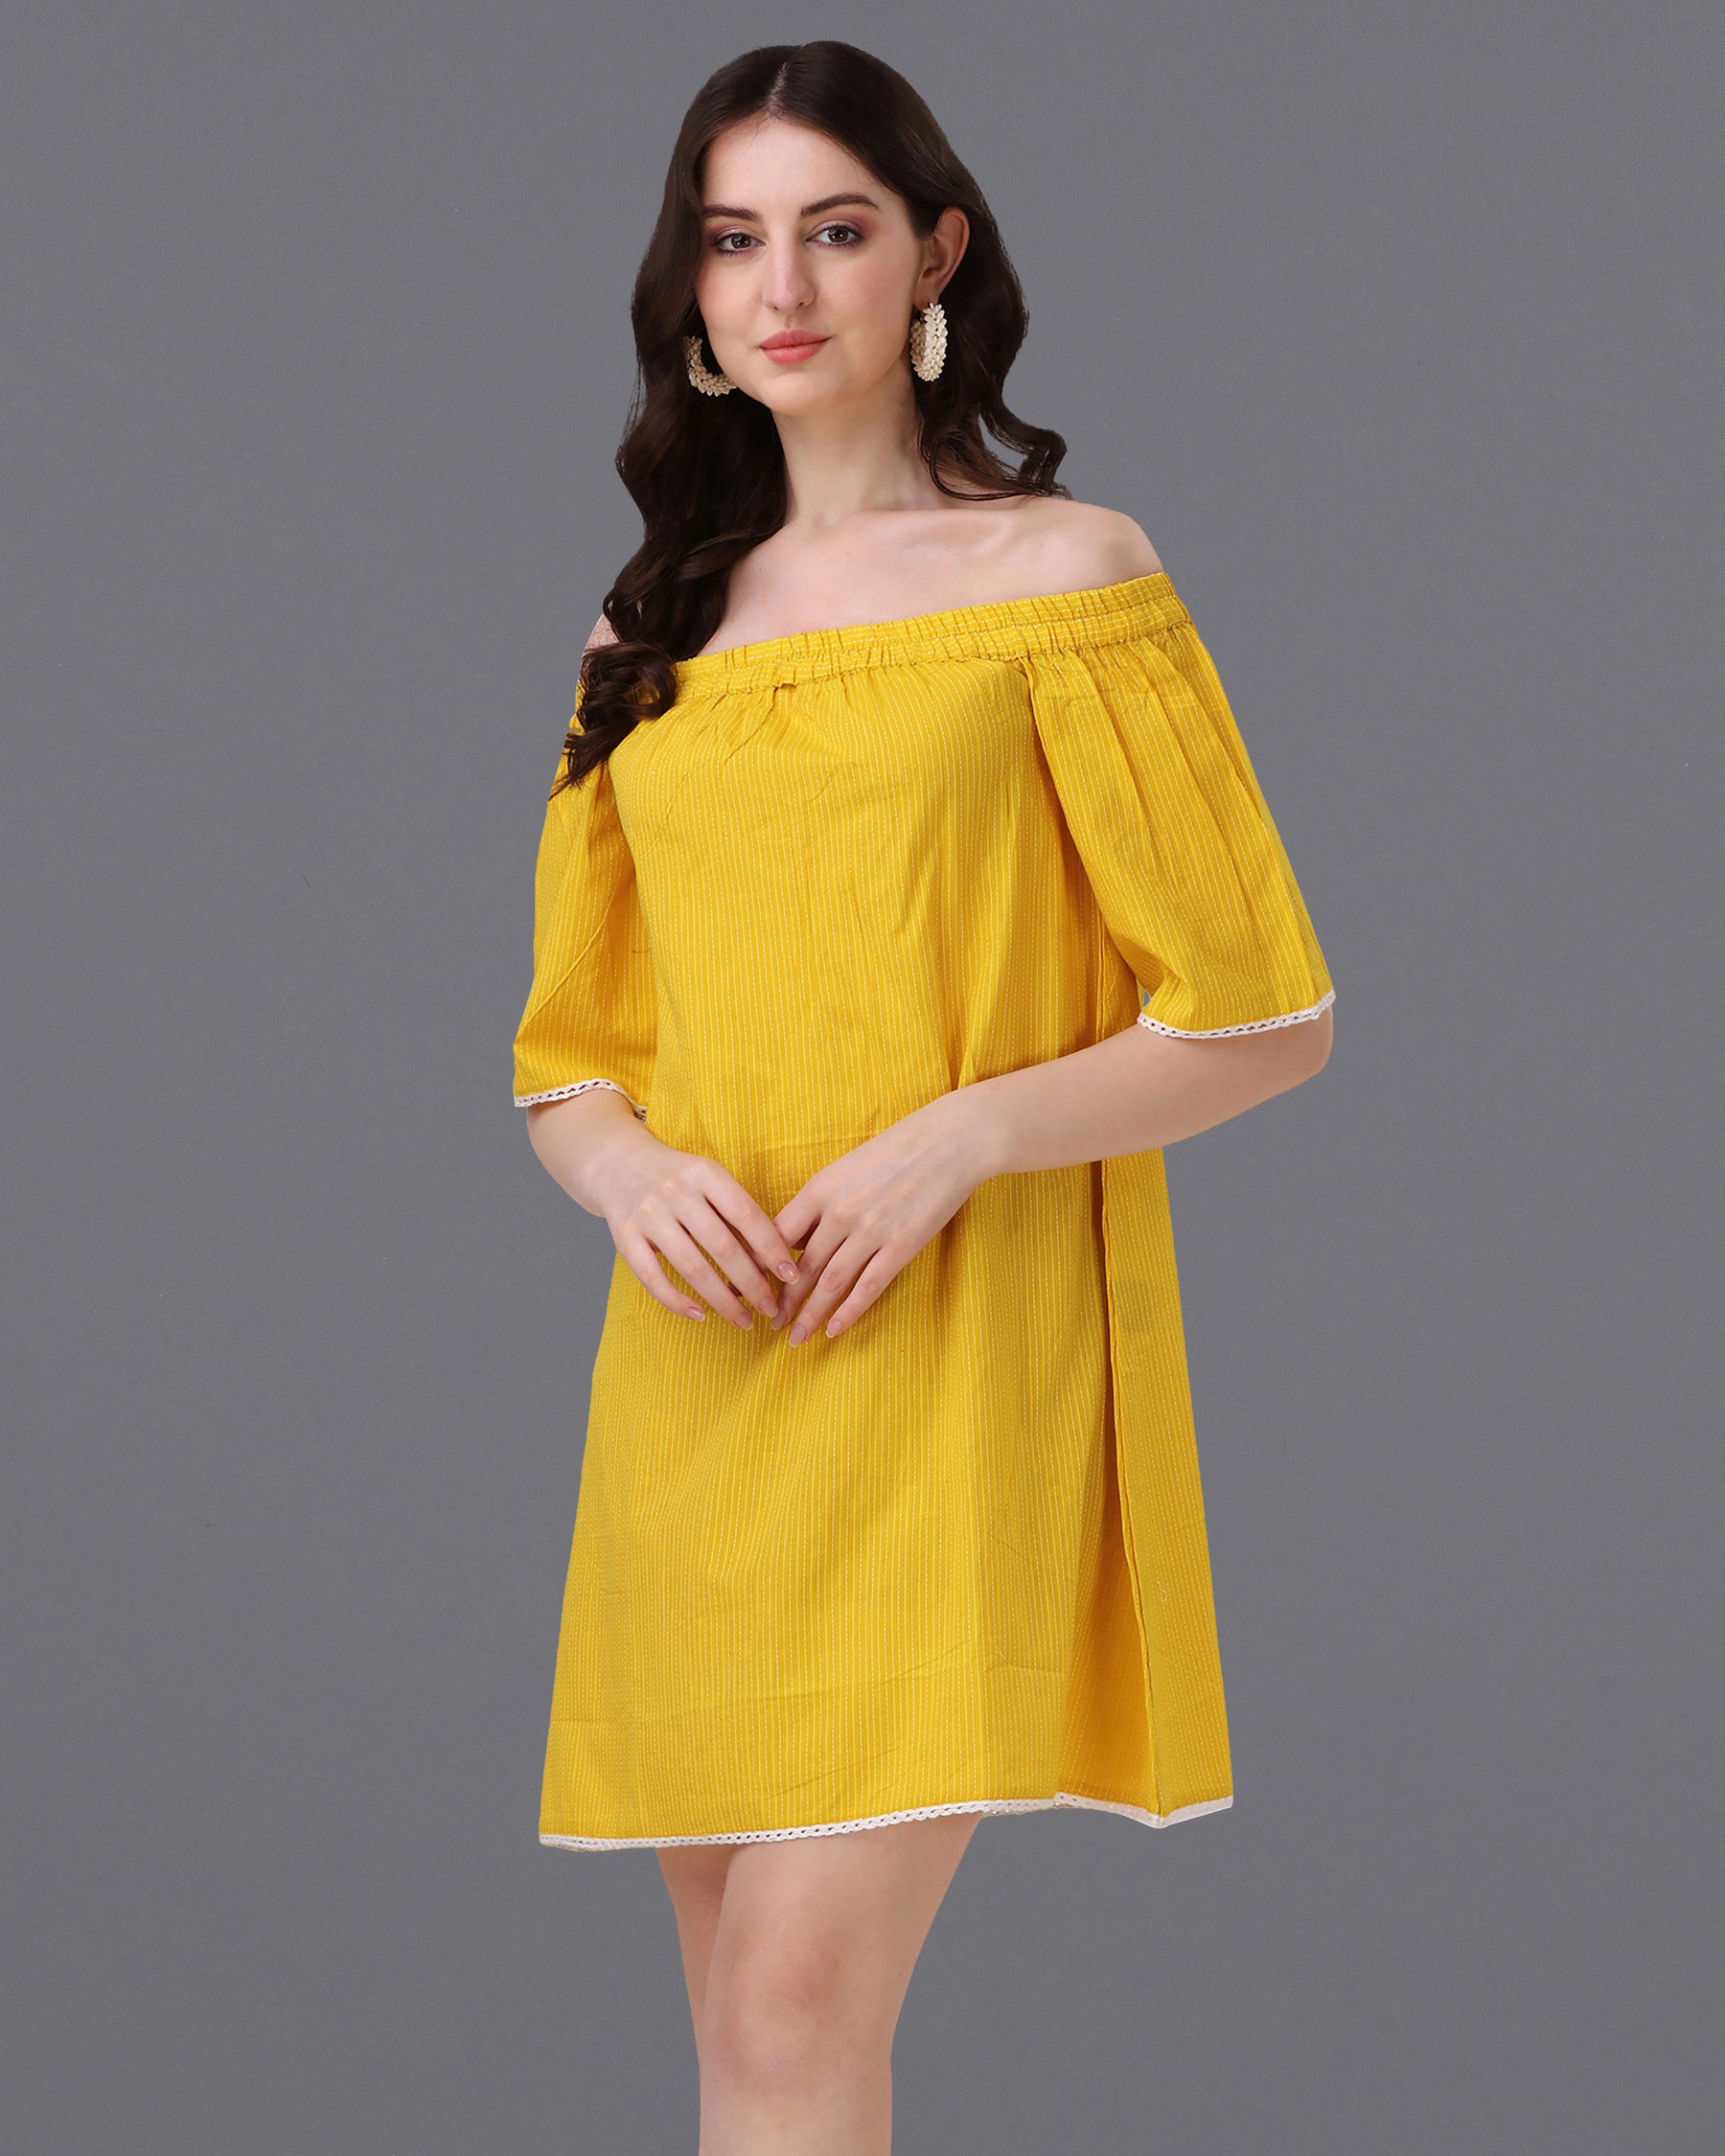 Macaroni Yellow Pinstriped Super Soft Premium Cotton Off-shoulder Dress WD044-32, WD044-34, WD044-36, WD044-38, WD044-40, WD044-42